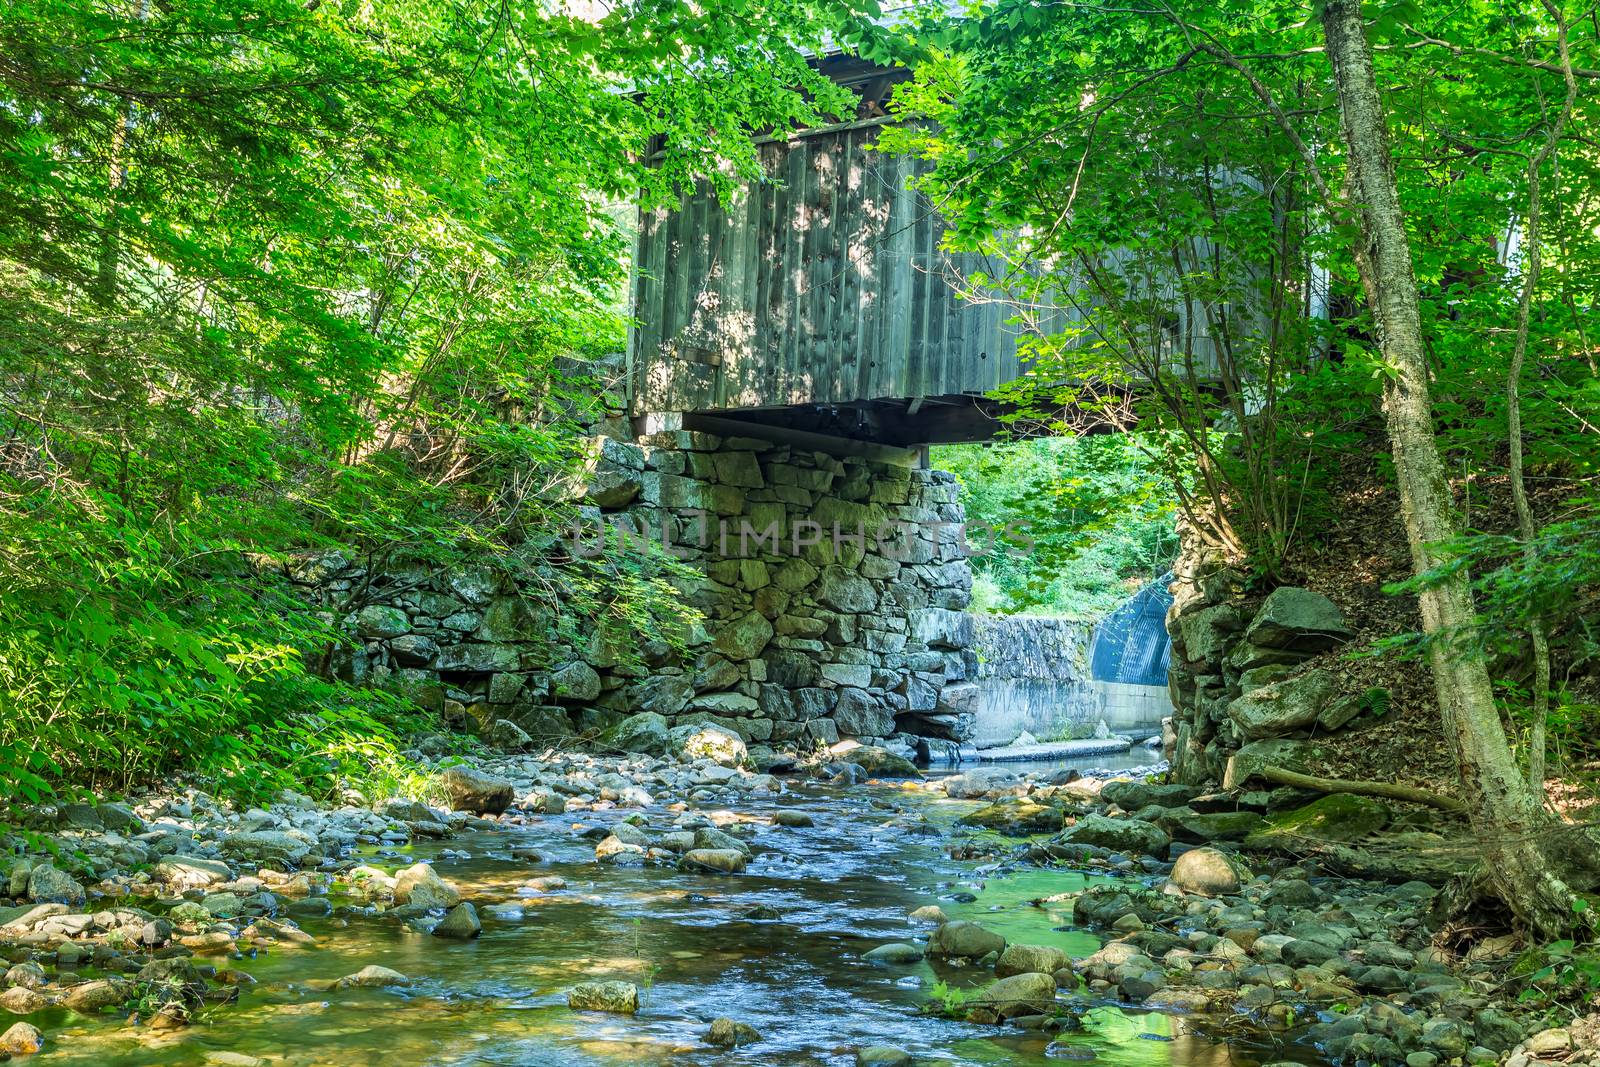 Prentiss Bridge Langdon New Hampshire by adifferentbrian